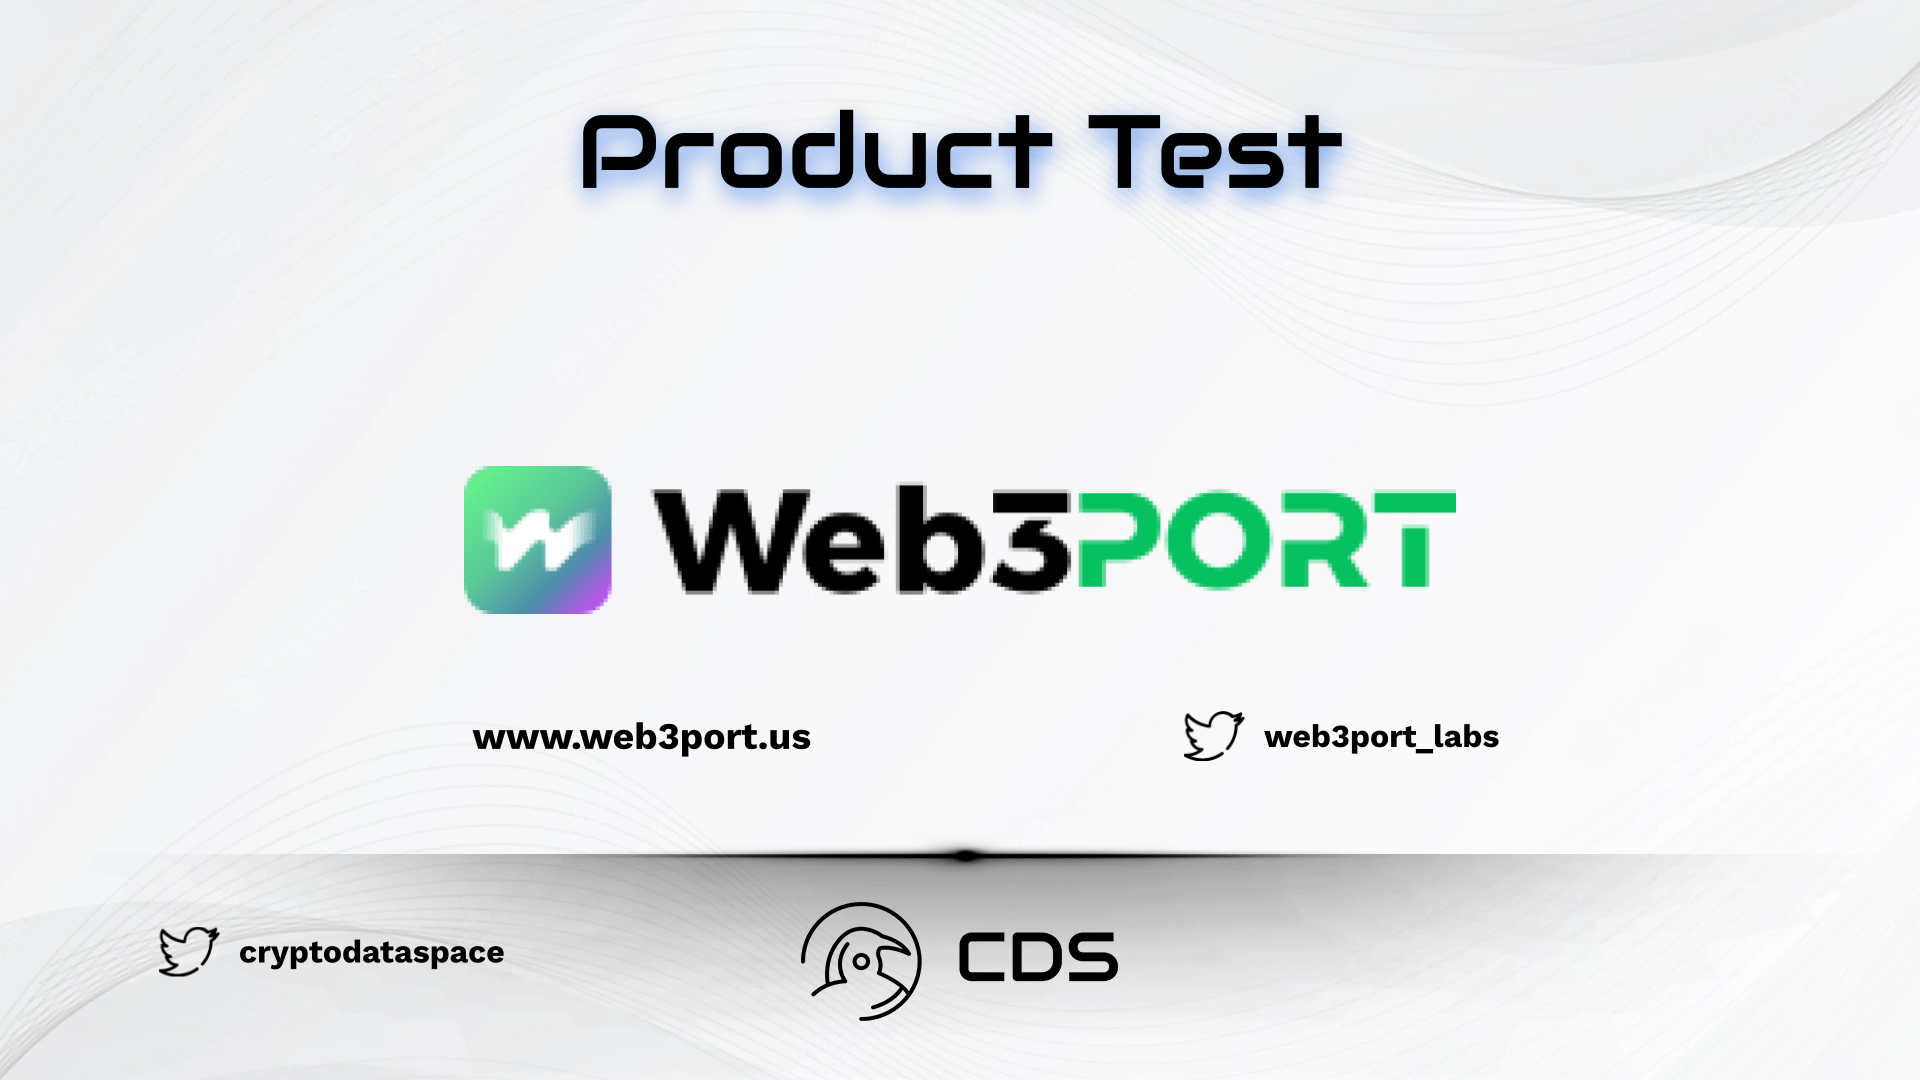 Web3port Product Test